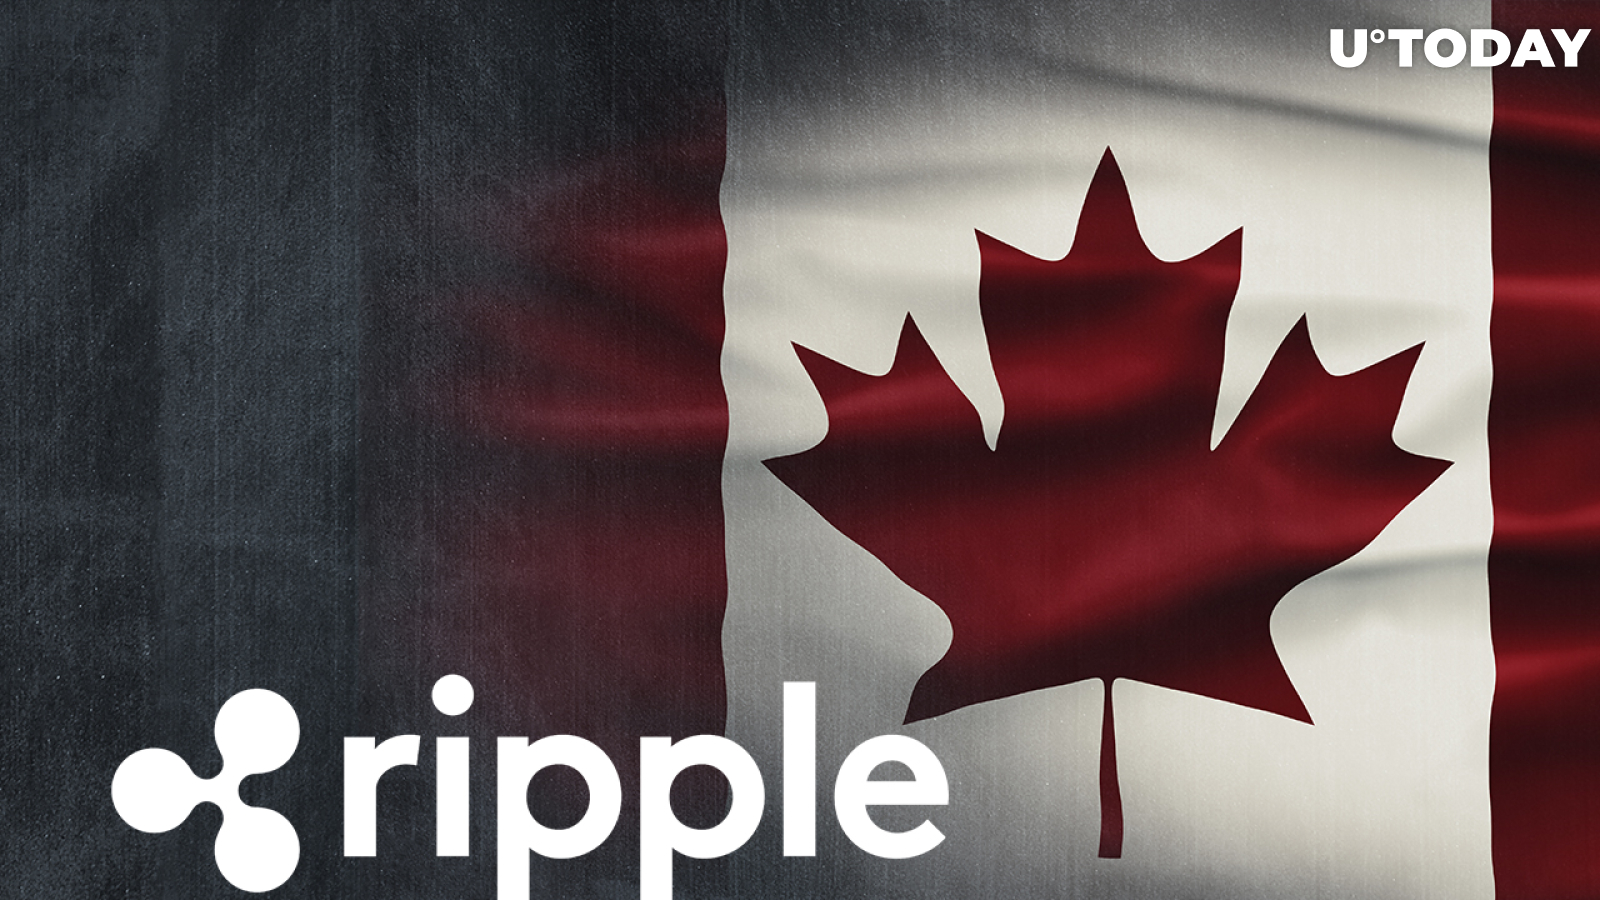 Ripple Goes on Hiring Spree in Canada